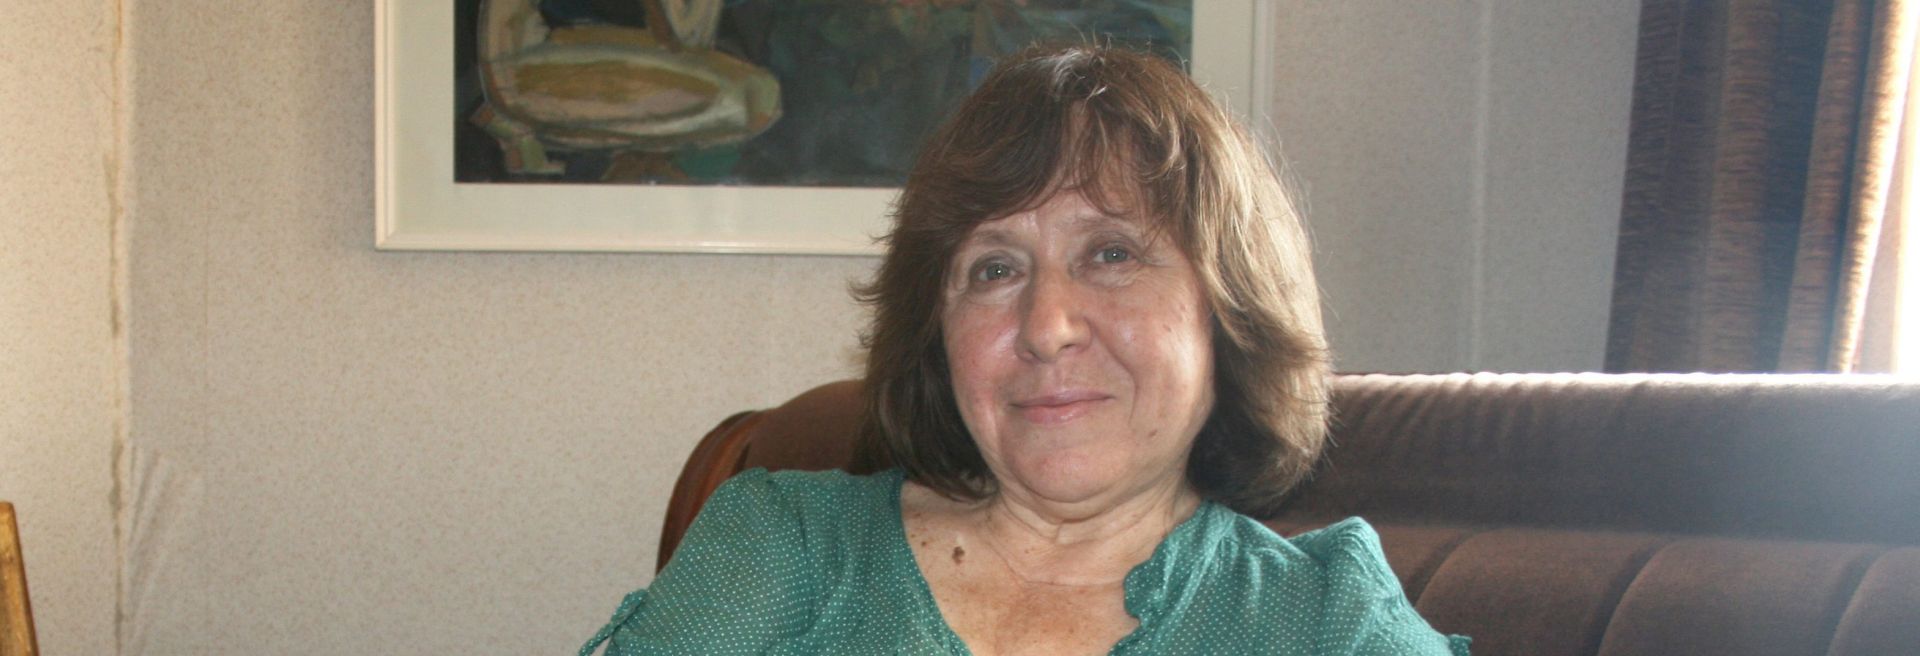 Svetlana Alexievich wins 2015 Nobel Prize in Literature